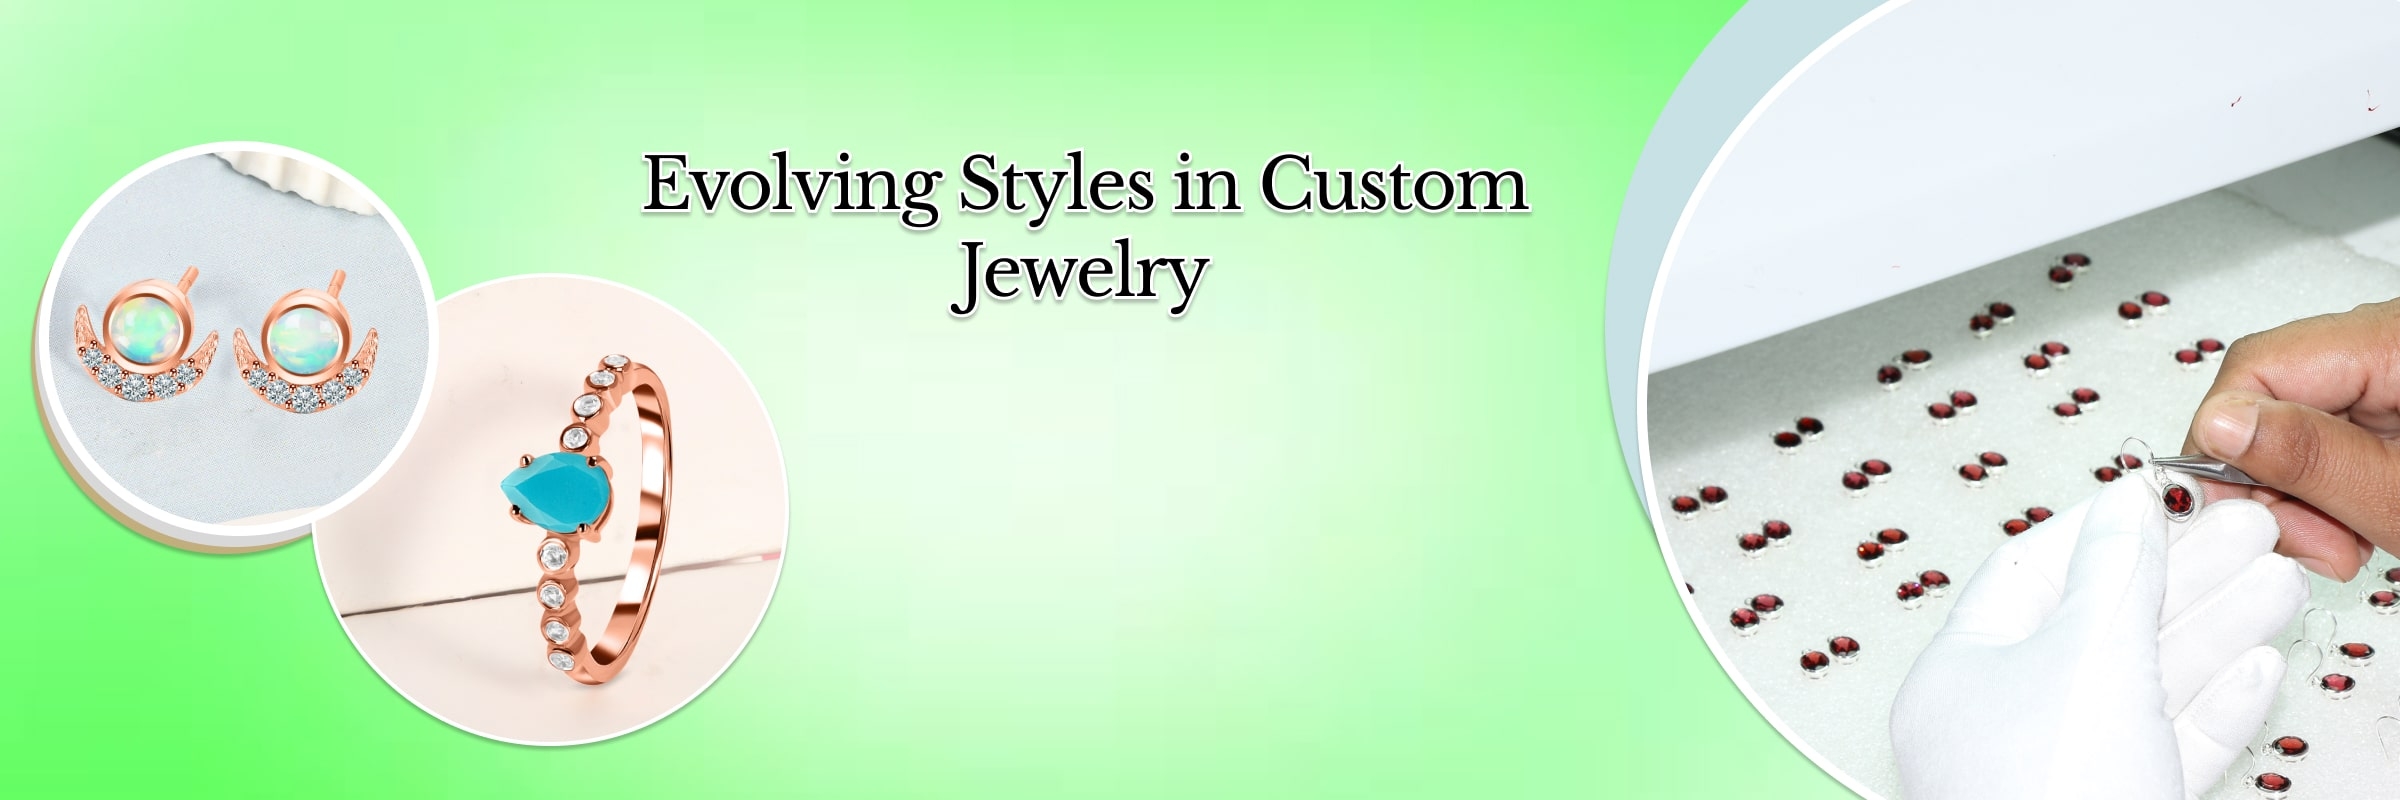 Jewelry Trends and Customization